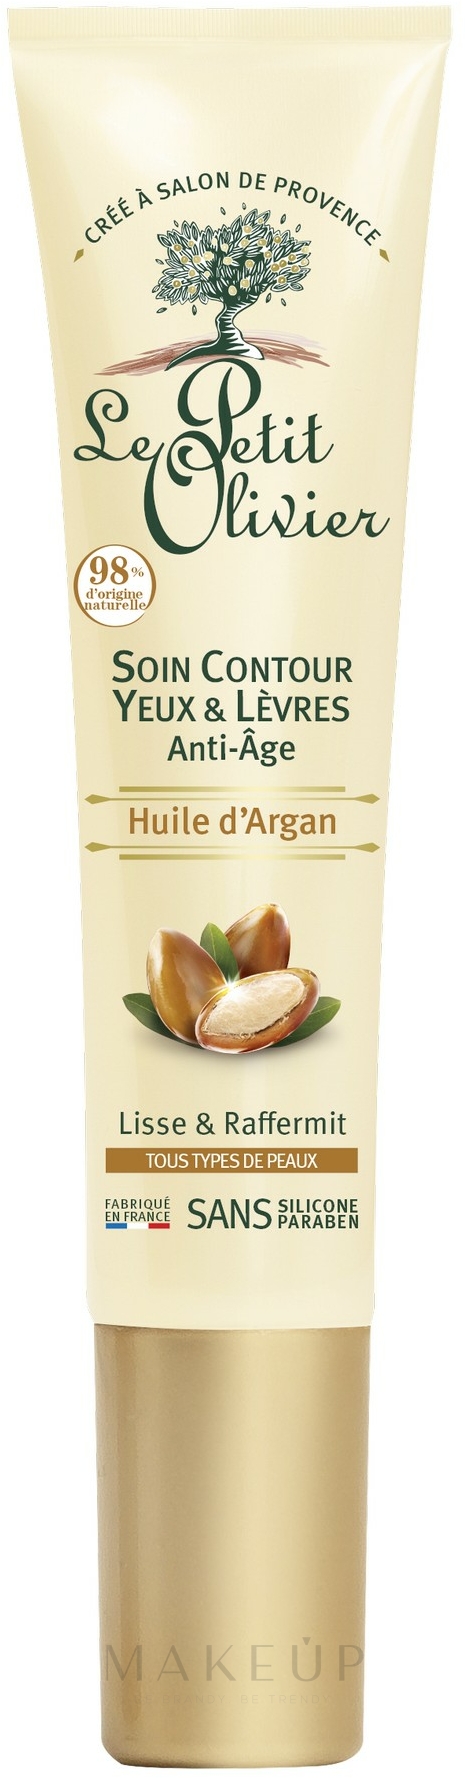 Anti-Aging Augen- und Lippencreme mit Bio-Arganöl - Petit Olivier Anti-aging eye and lip contour with Argan oil — Foto 15 ml